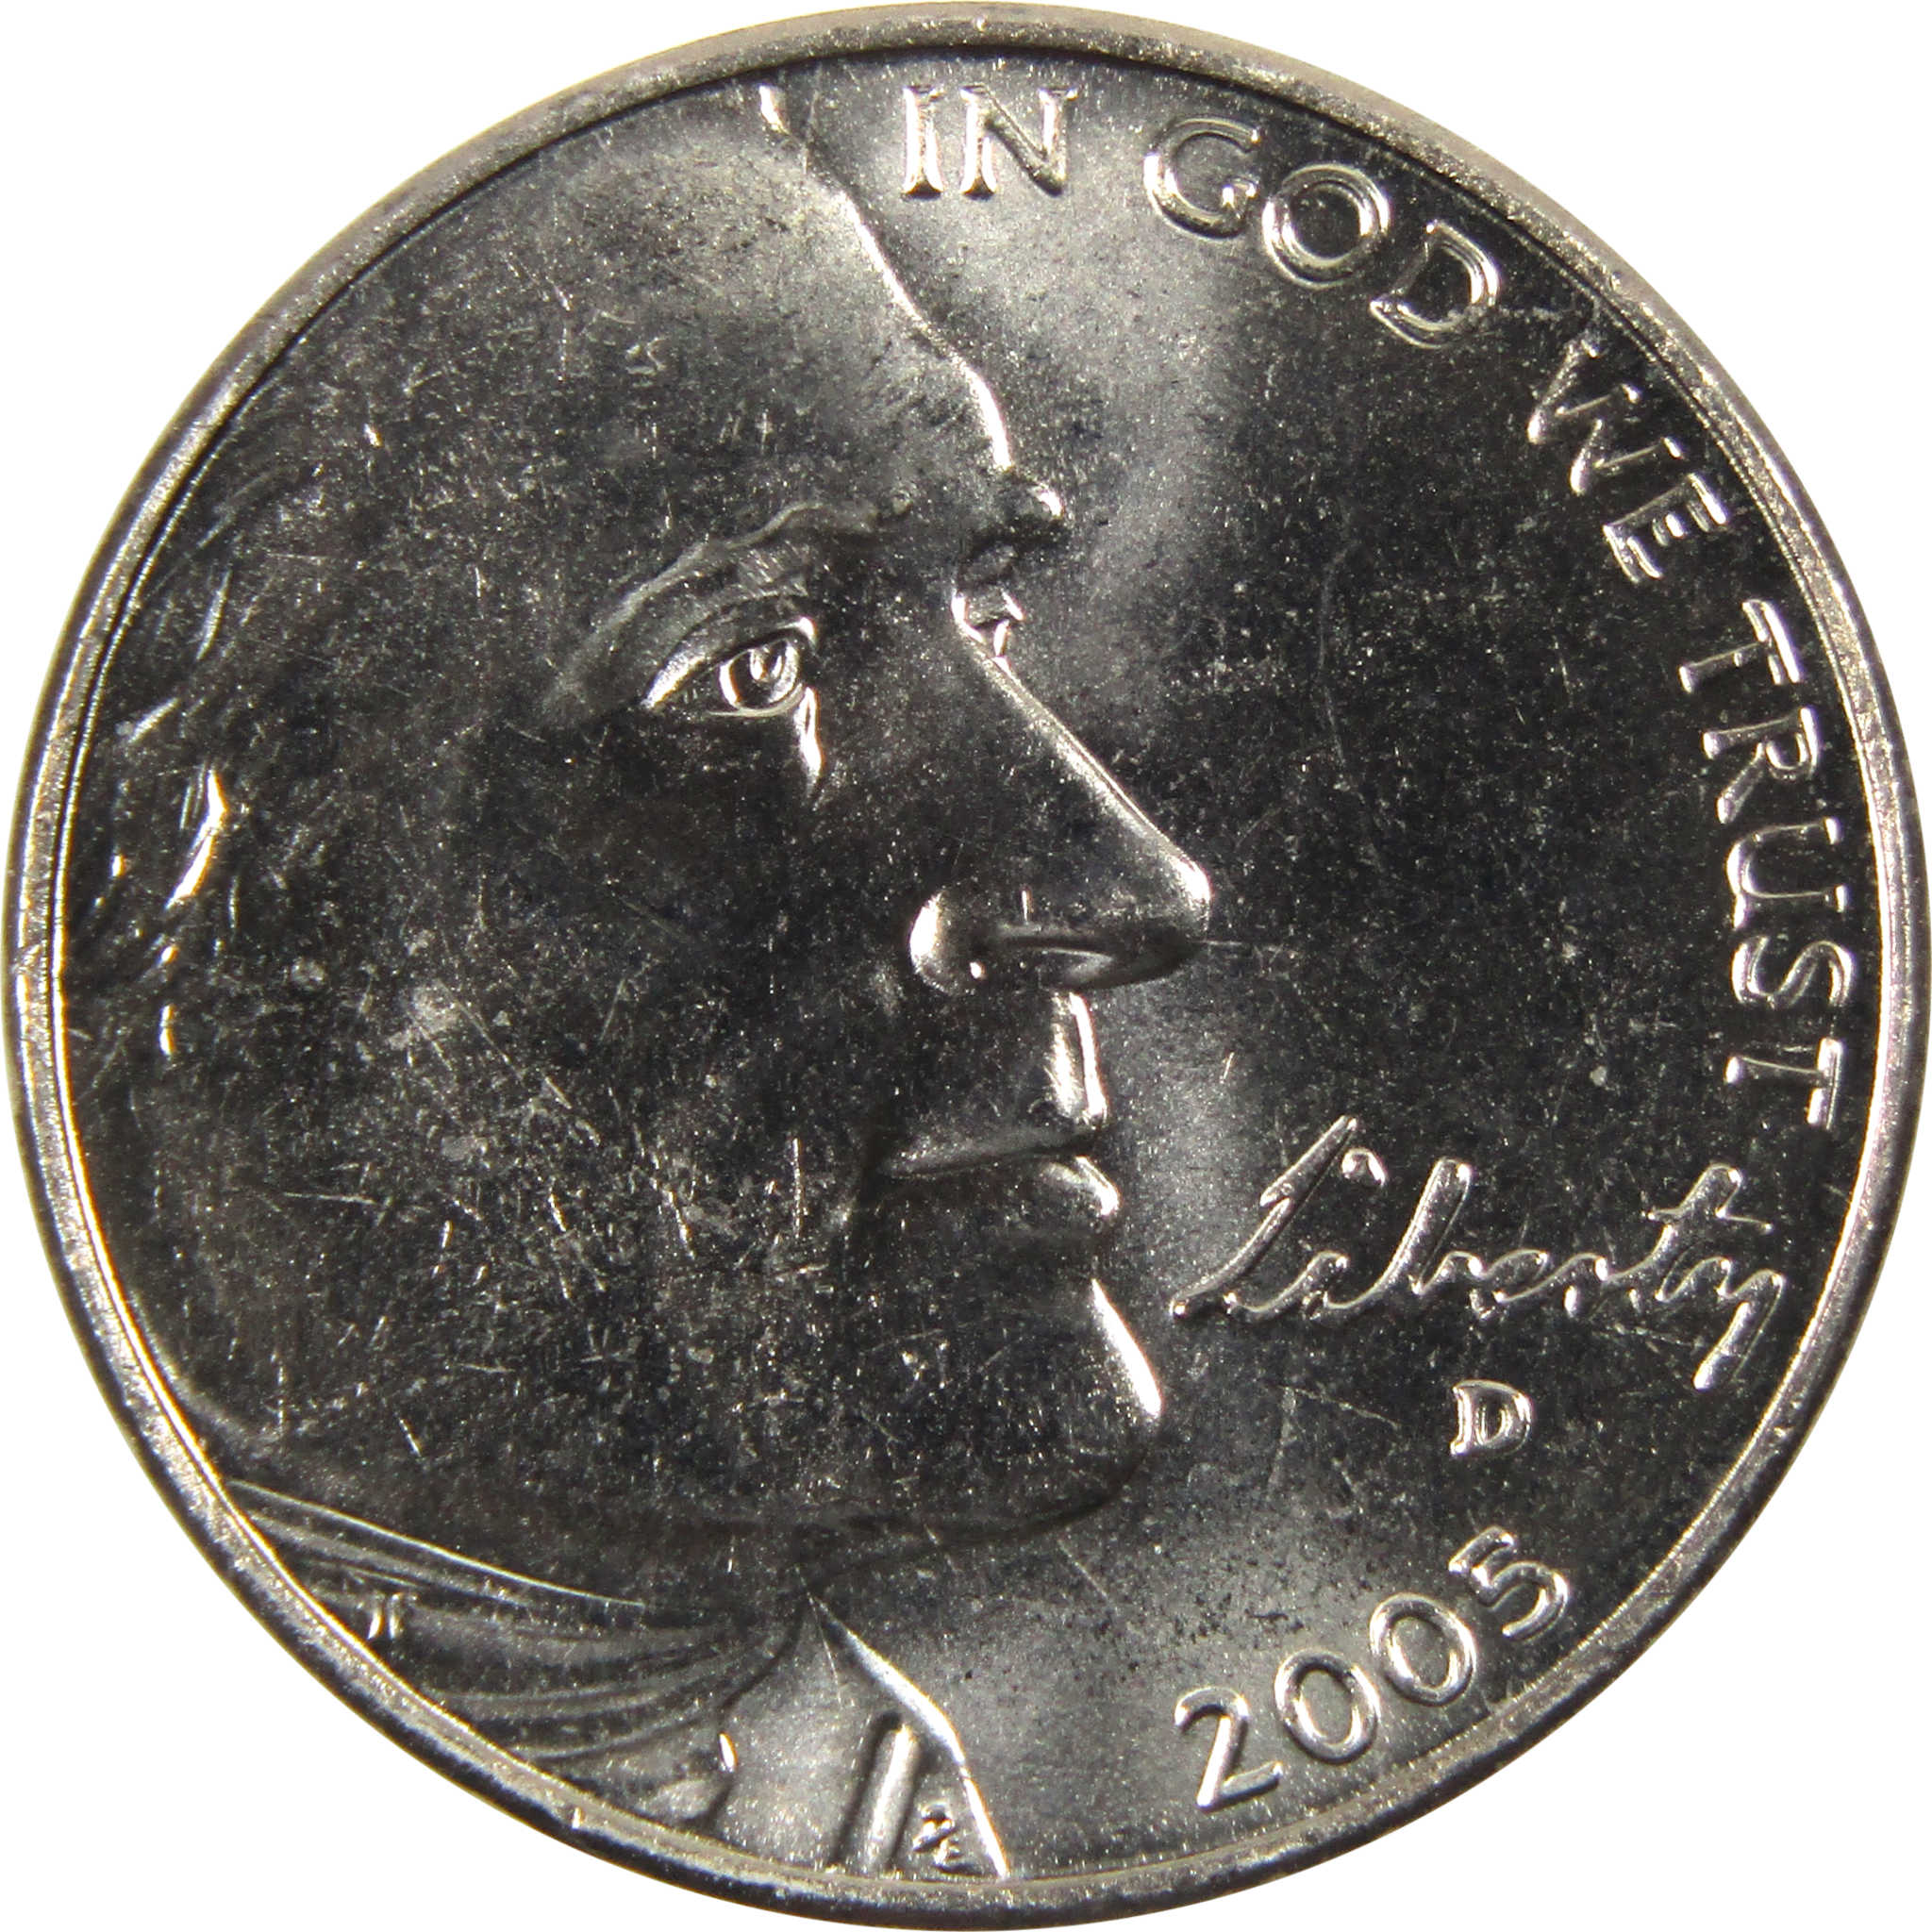 2005 D American Bison Jefferson Nickel BU Uncirculated 5c Coin